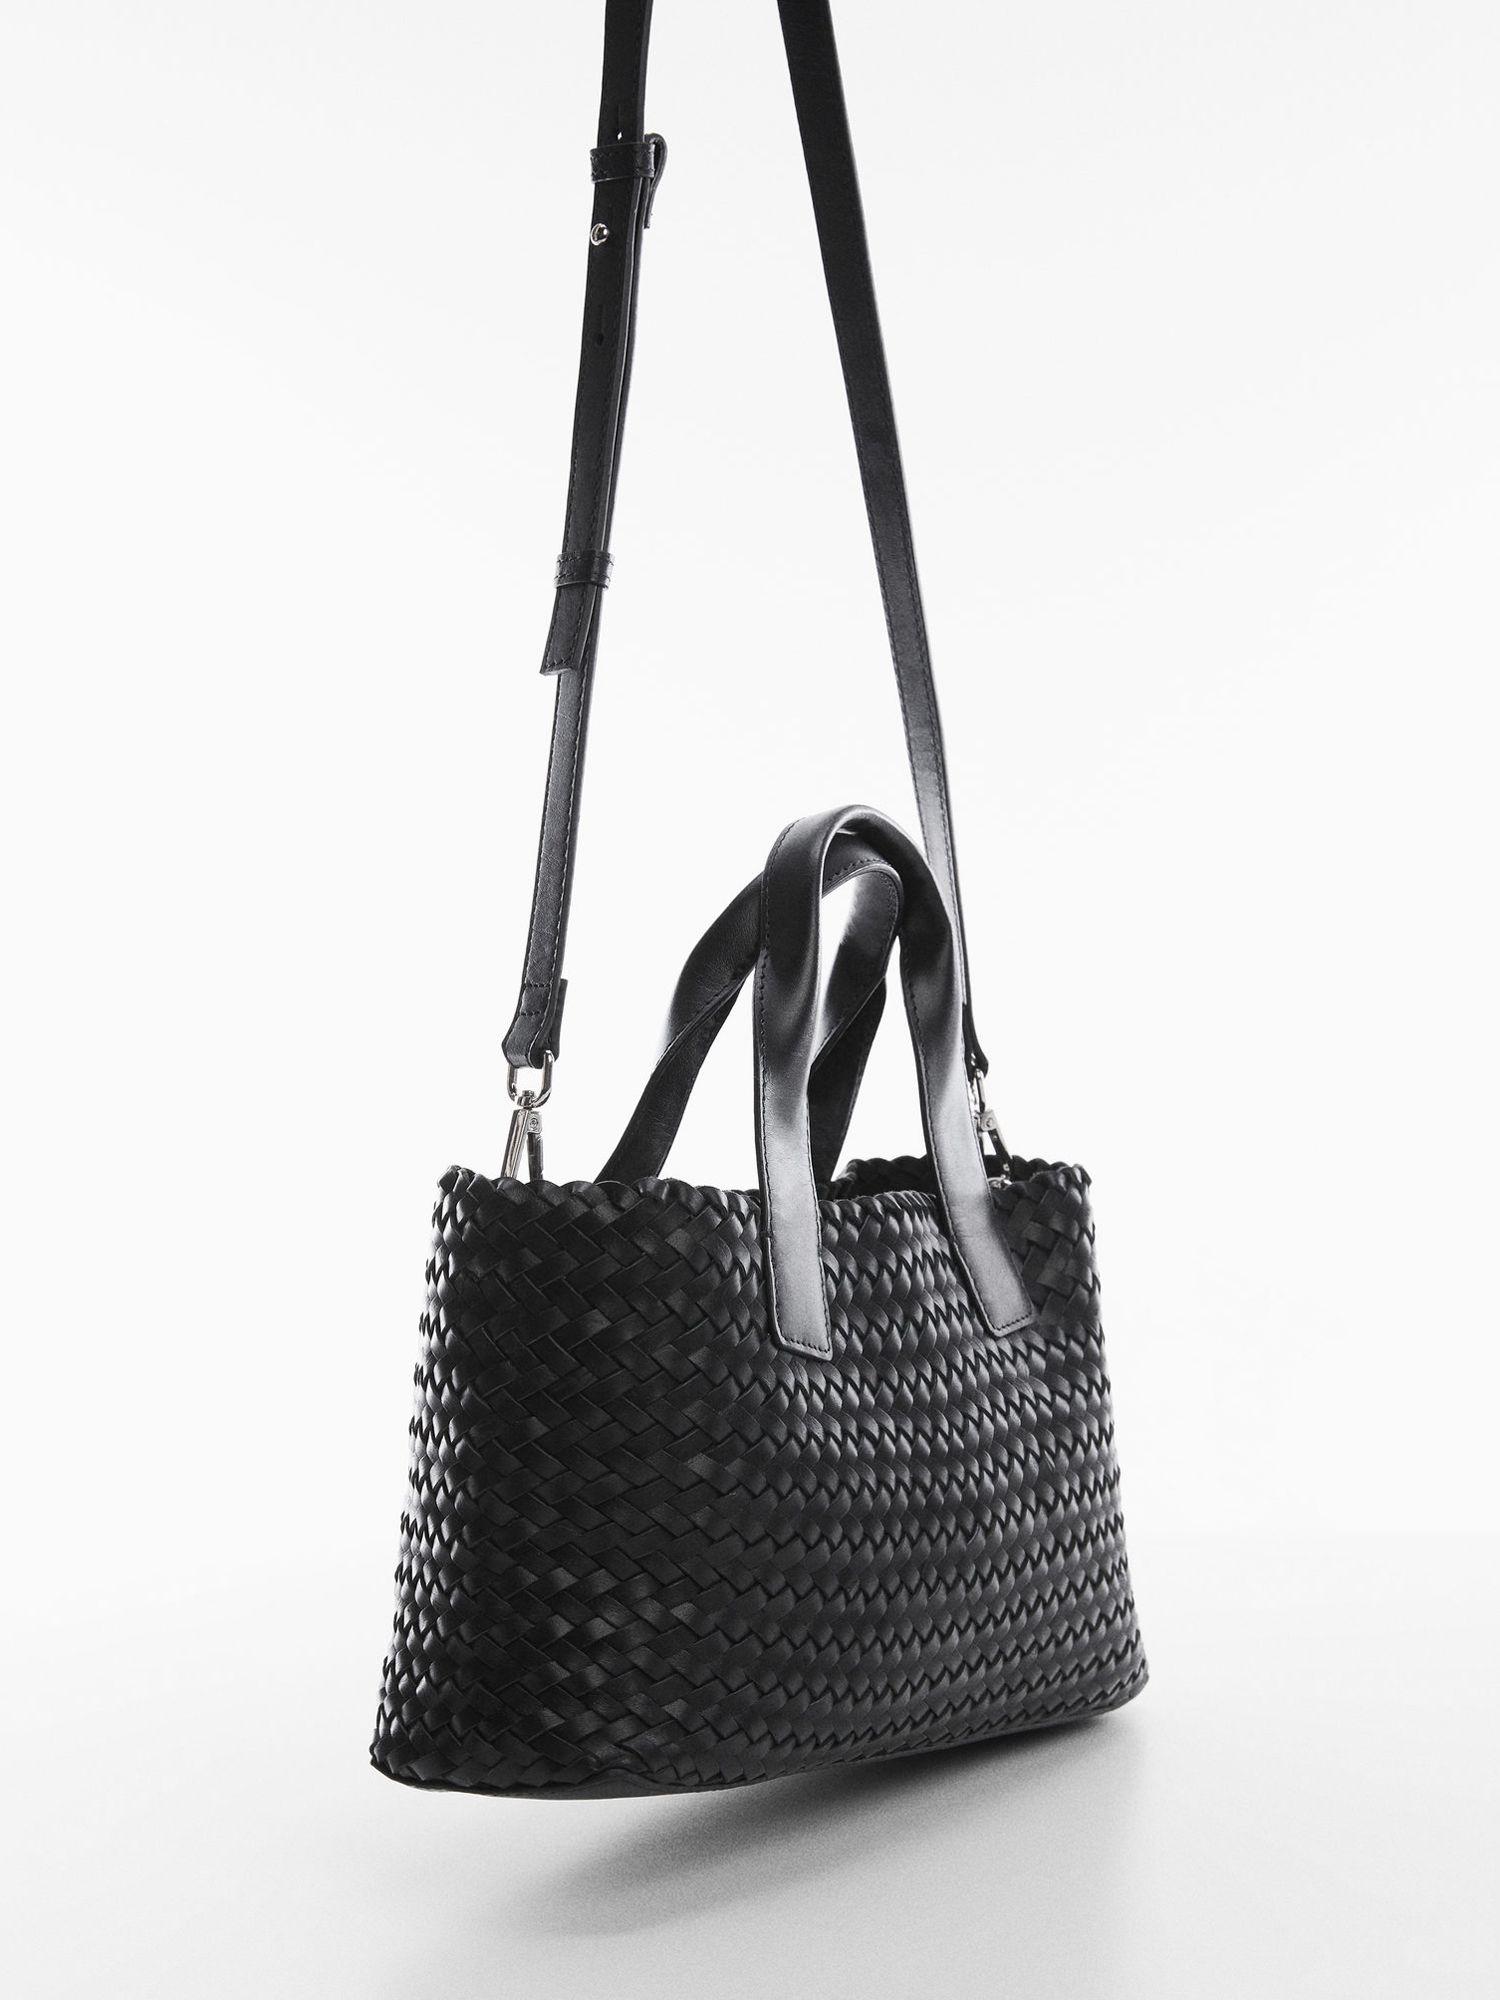 Mango Gardenia Woven Leather Tote Bag in Black | Lyst UK